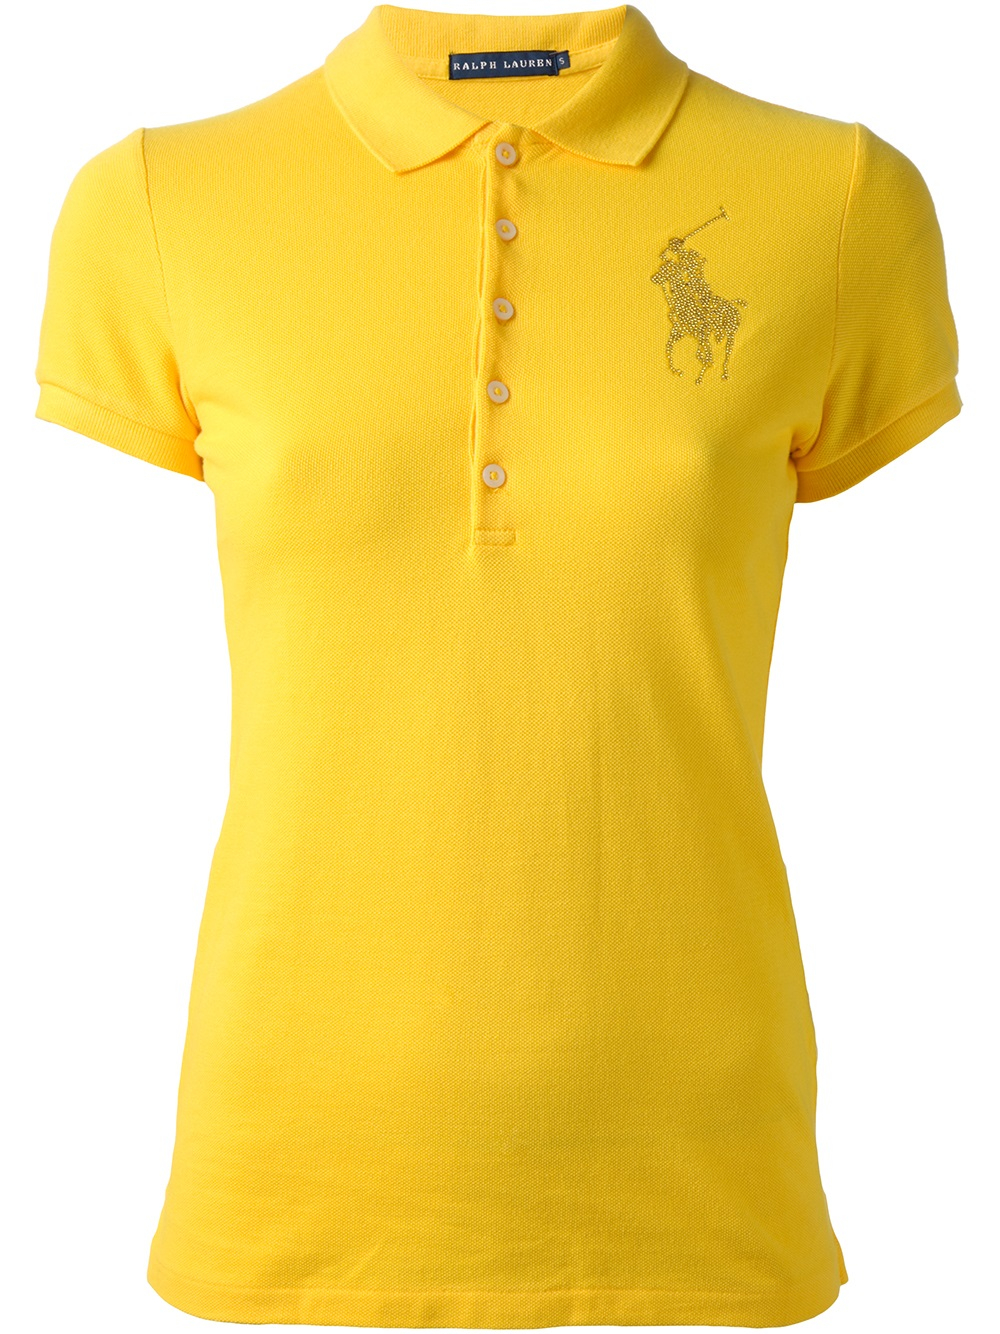 Asda yellow ralph lauren t shirt, Latest saree blouse back neck designs 2019, karl lagerfeld t shirt ladies. 